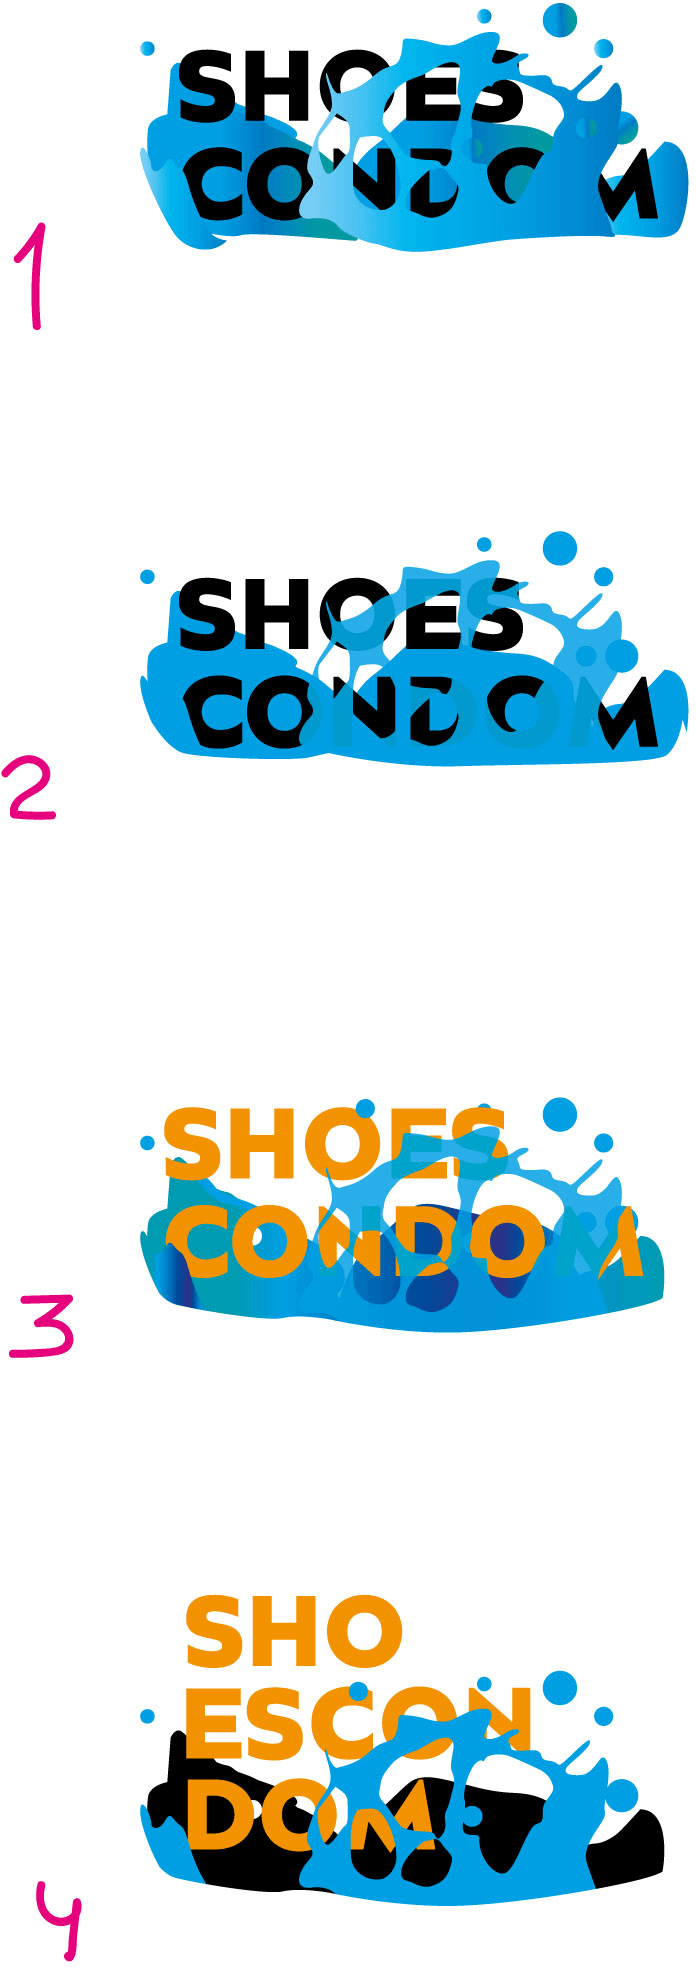 shoescondom process 06